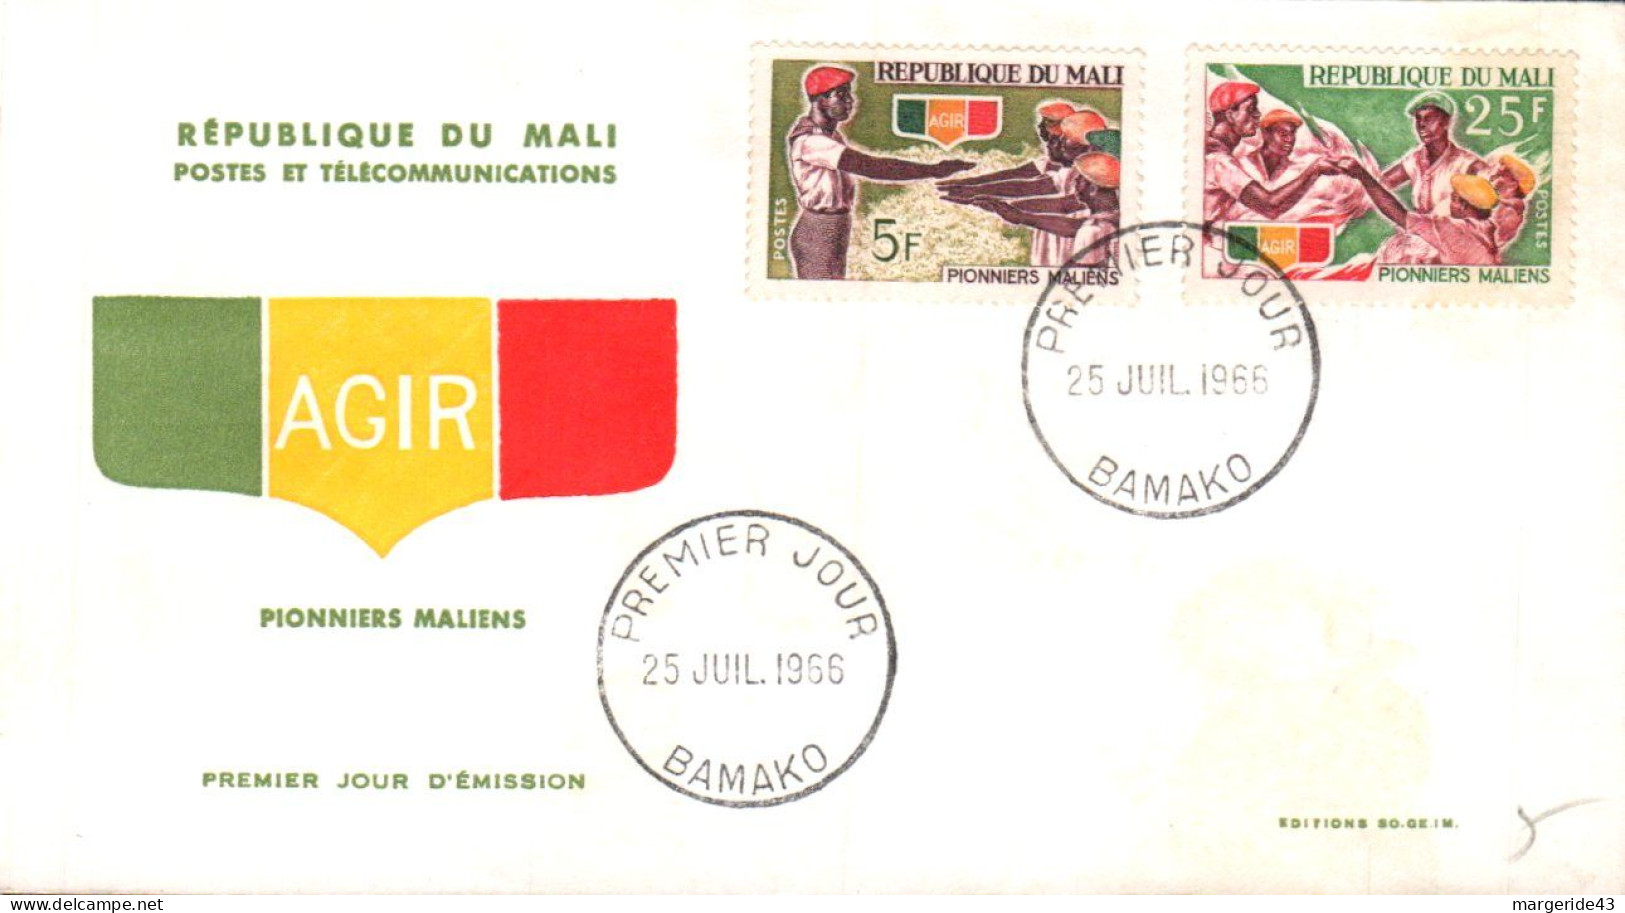 MALI FDC 1966 PIONNIERS MALIENS - Malí (1959-...)